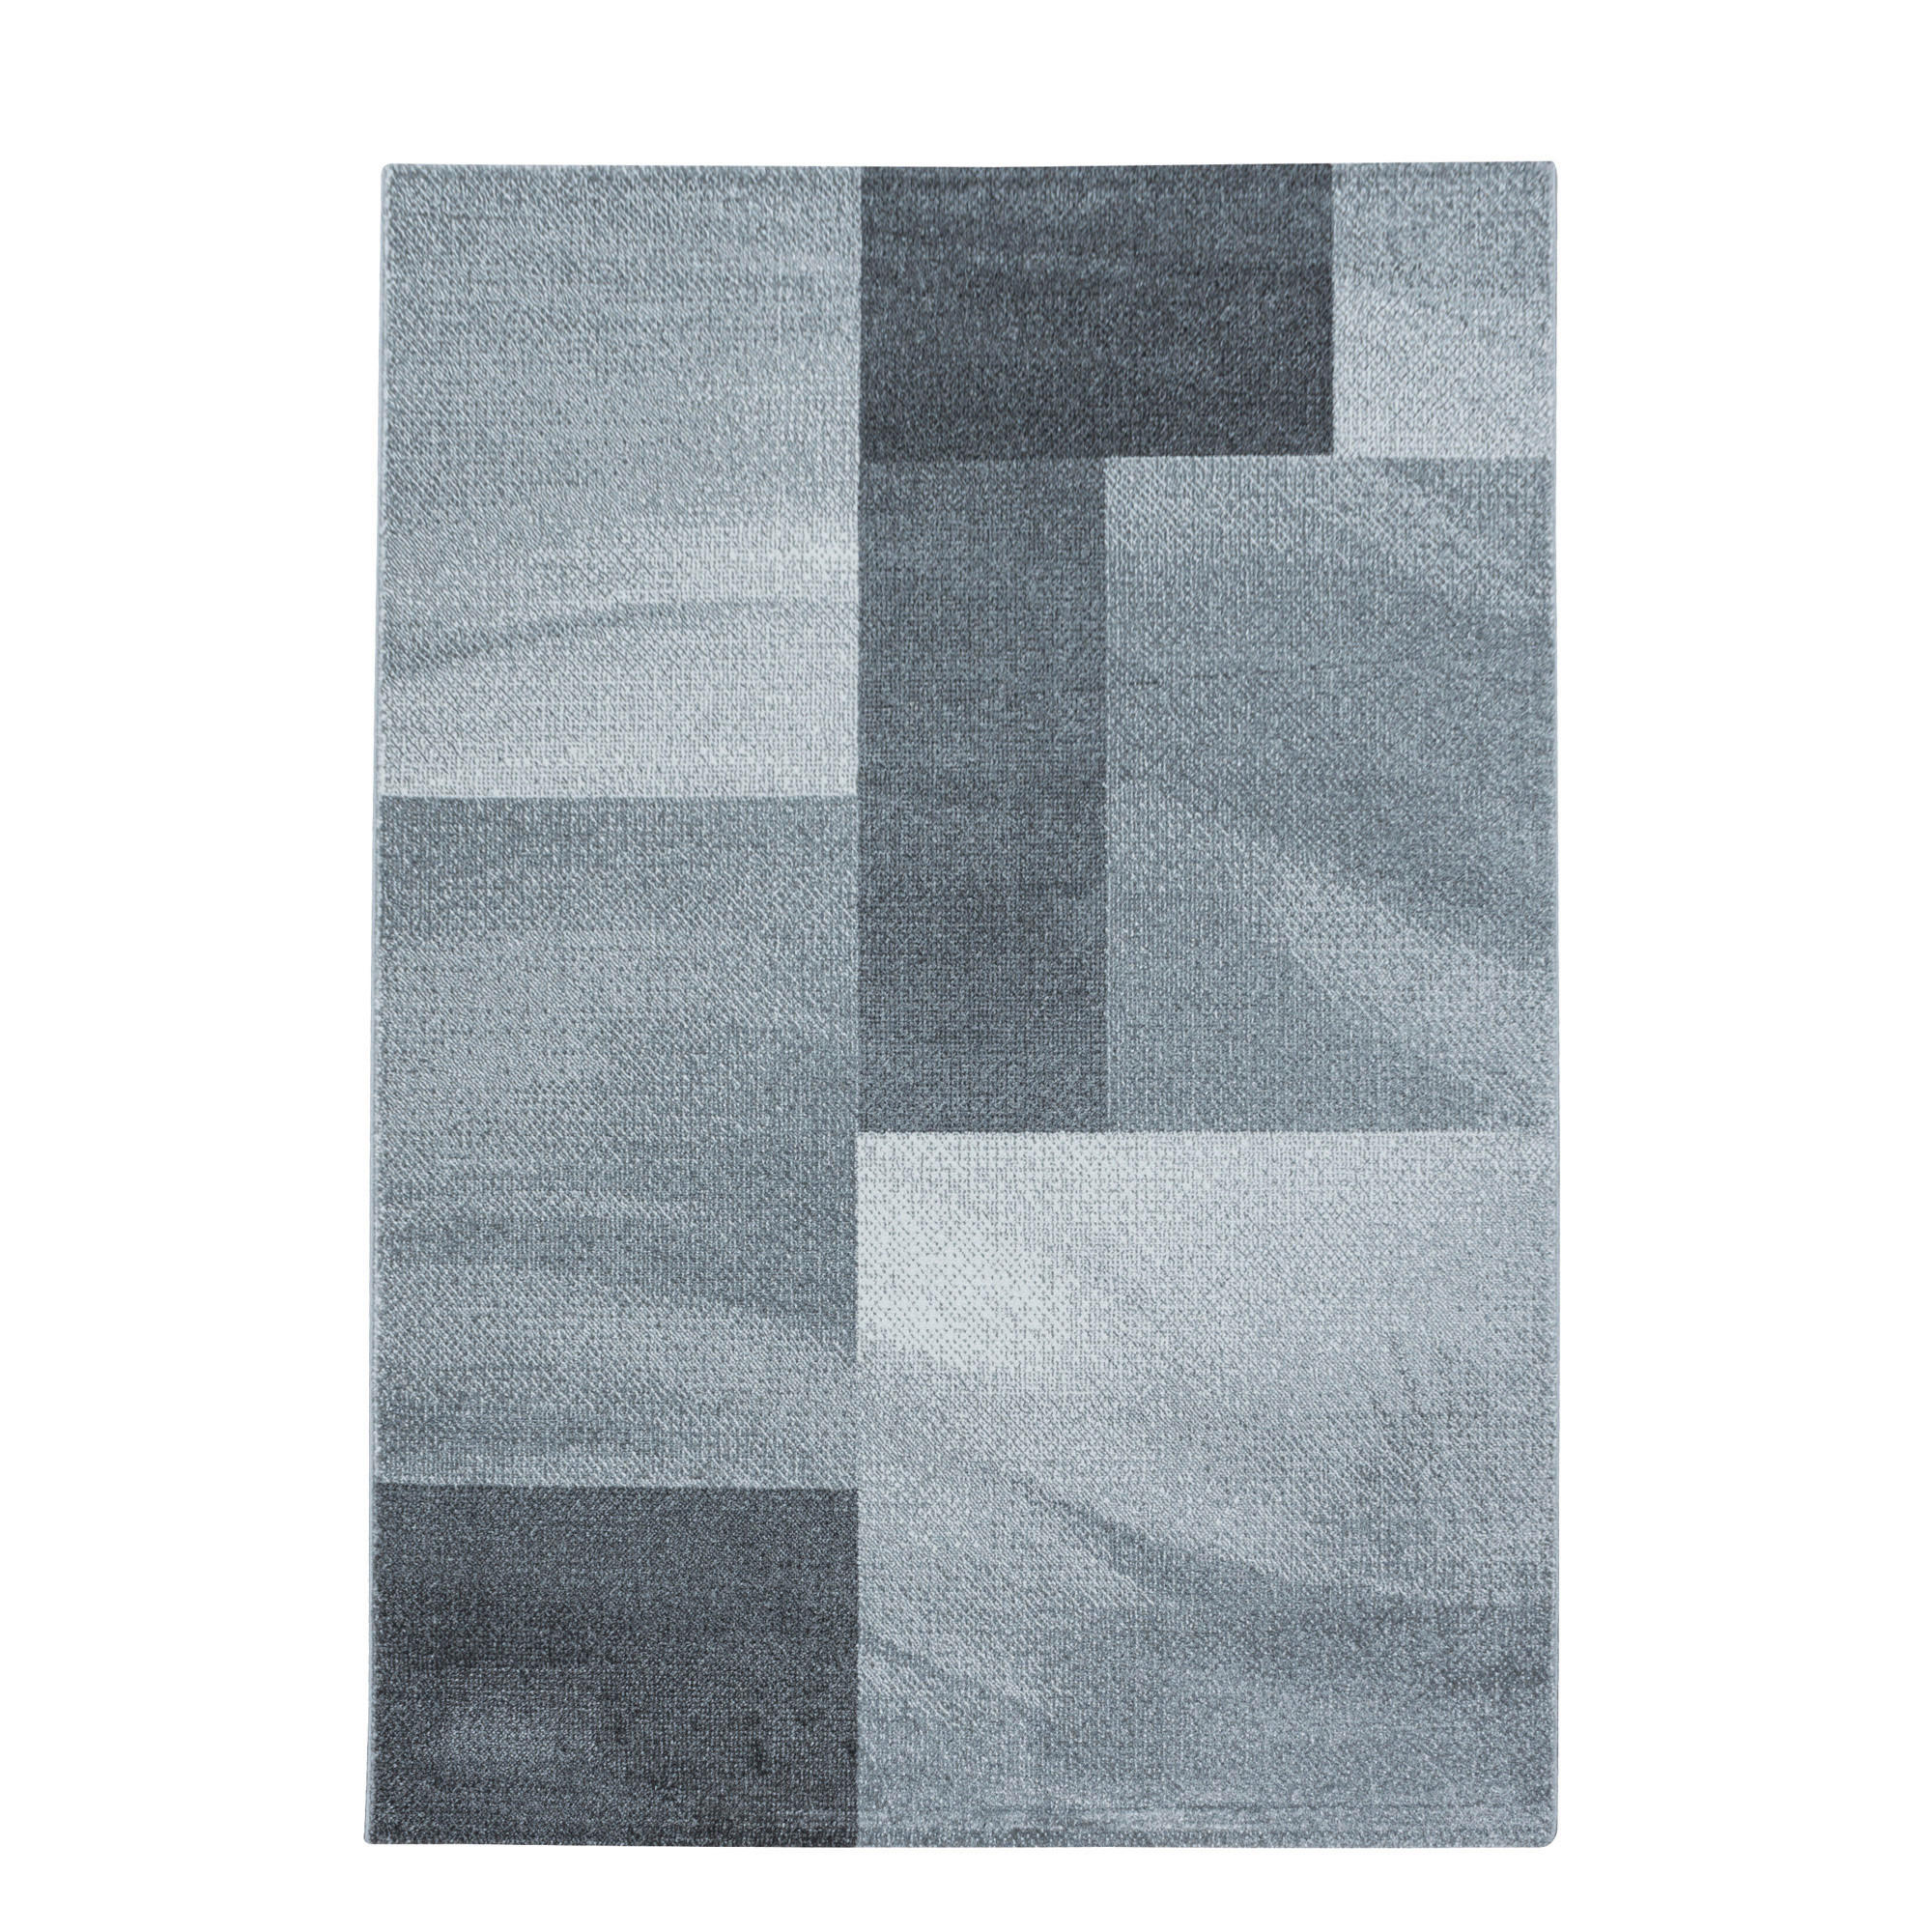 WEBTEPPICH  80/150 cm  Grau   - Grau, Basics, Textil (80/150cm) - Novel